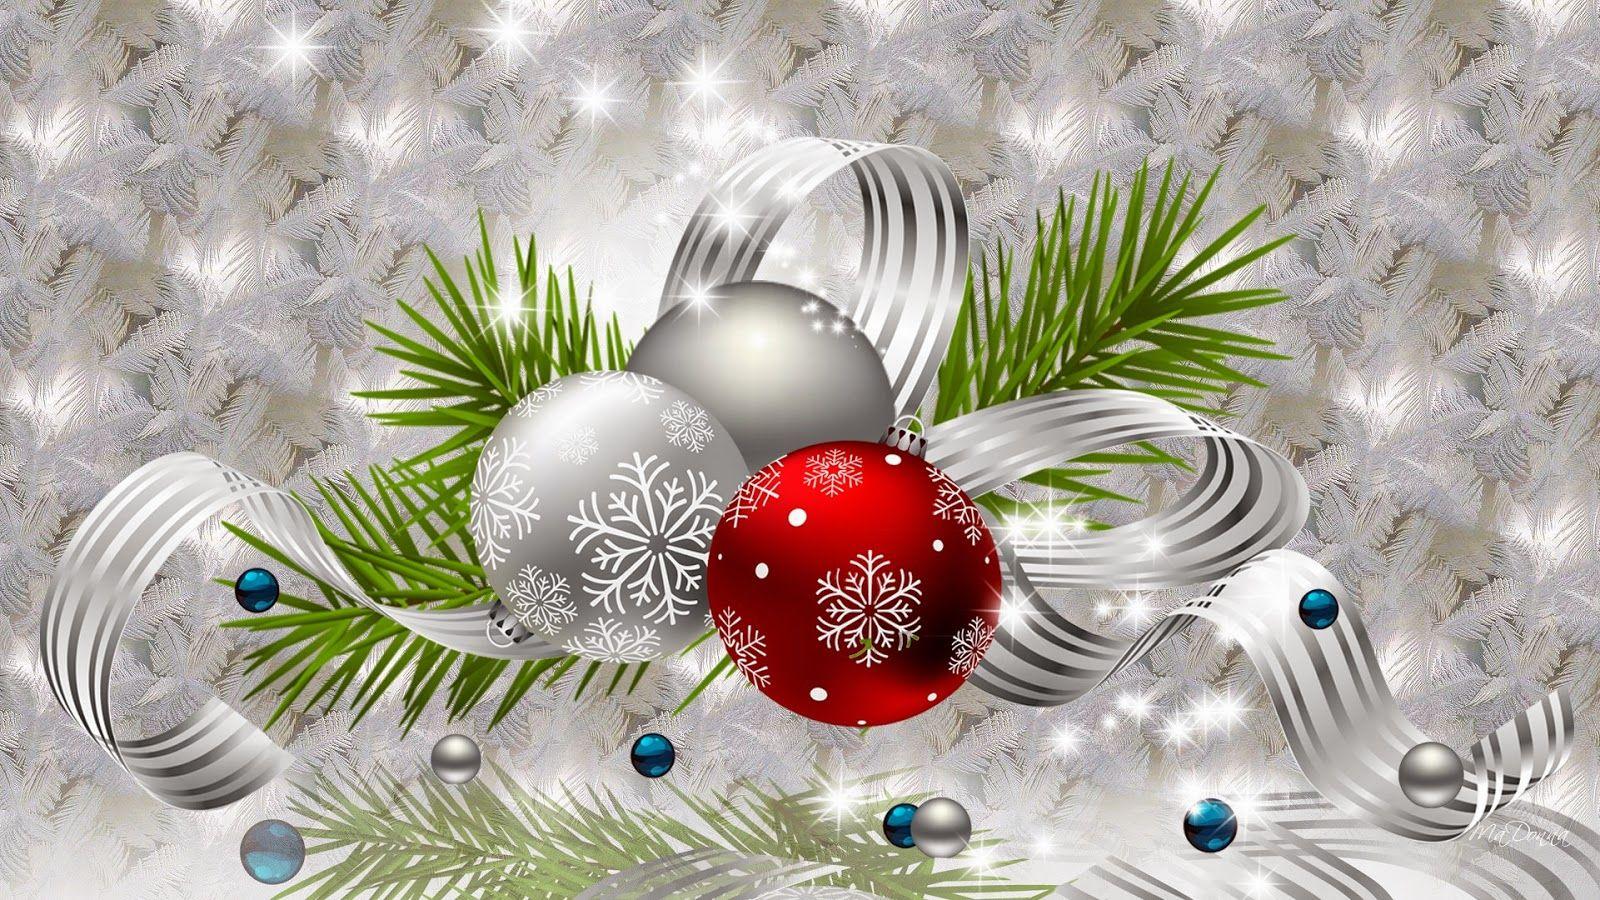 Christmas tree baubles decorations beautiful balls designs image. Christmas wallpaper, Christmas wallpaper hd, Christmas desktop wallpaper